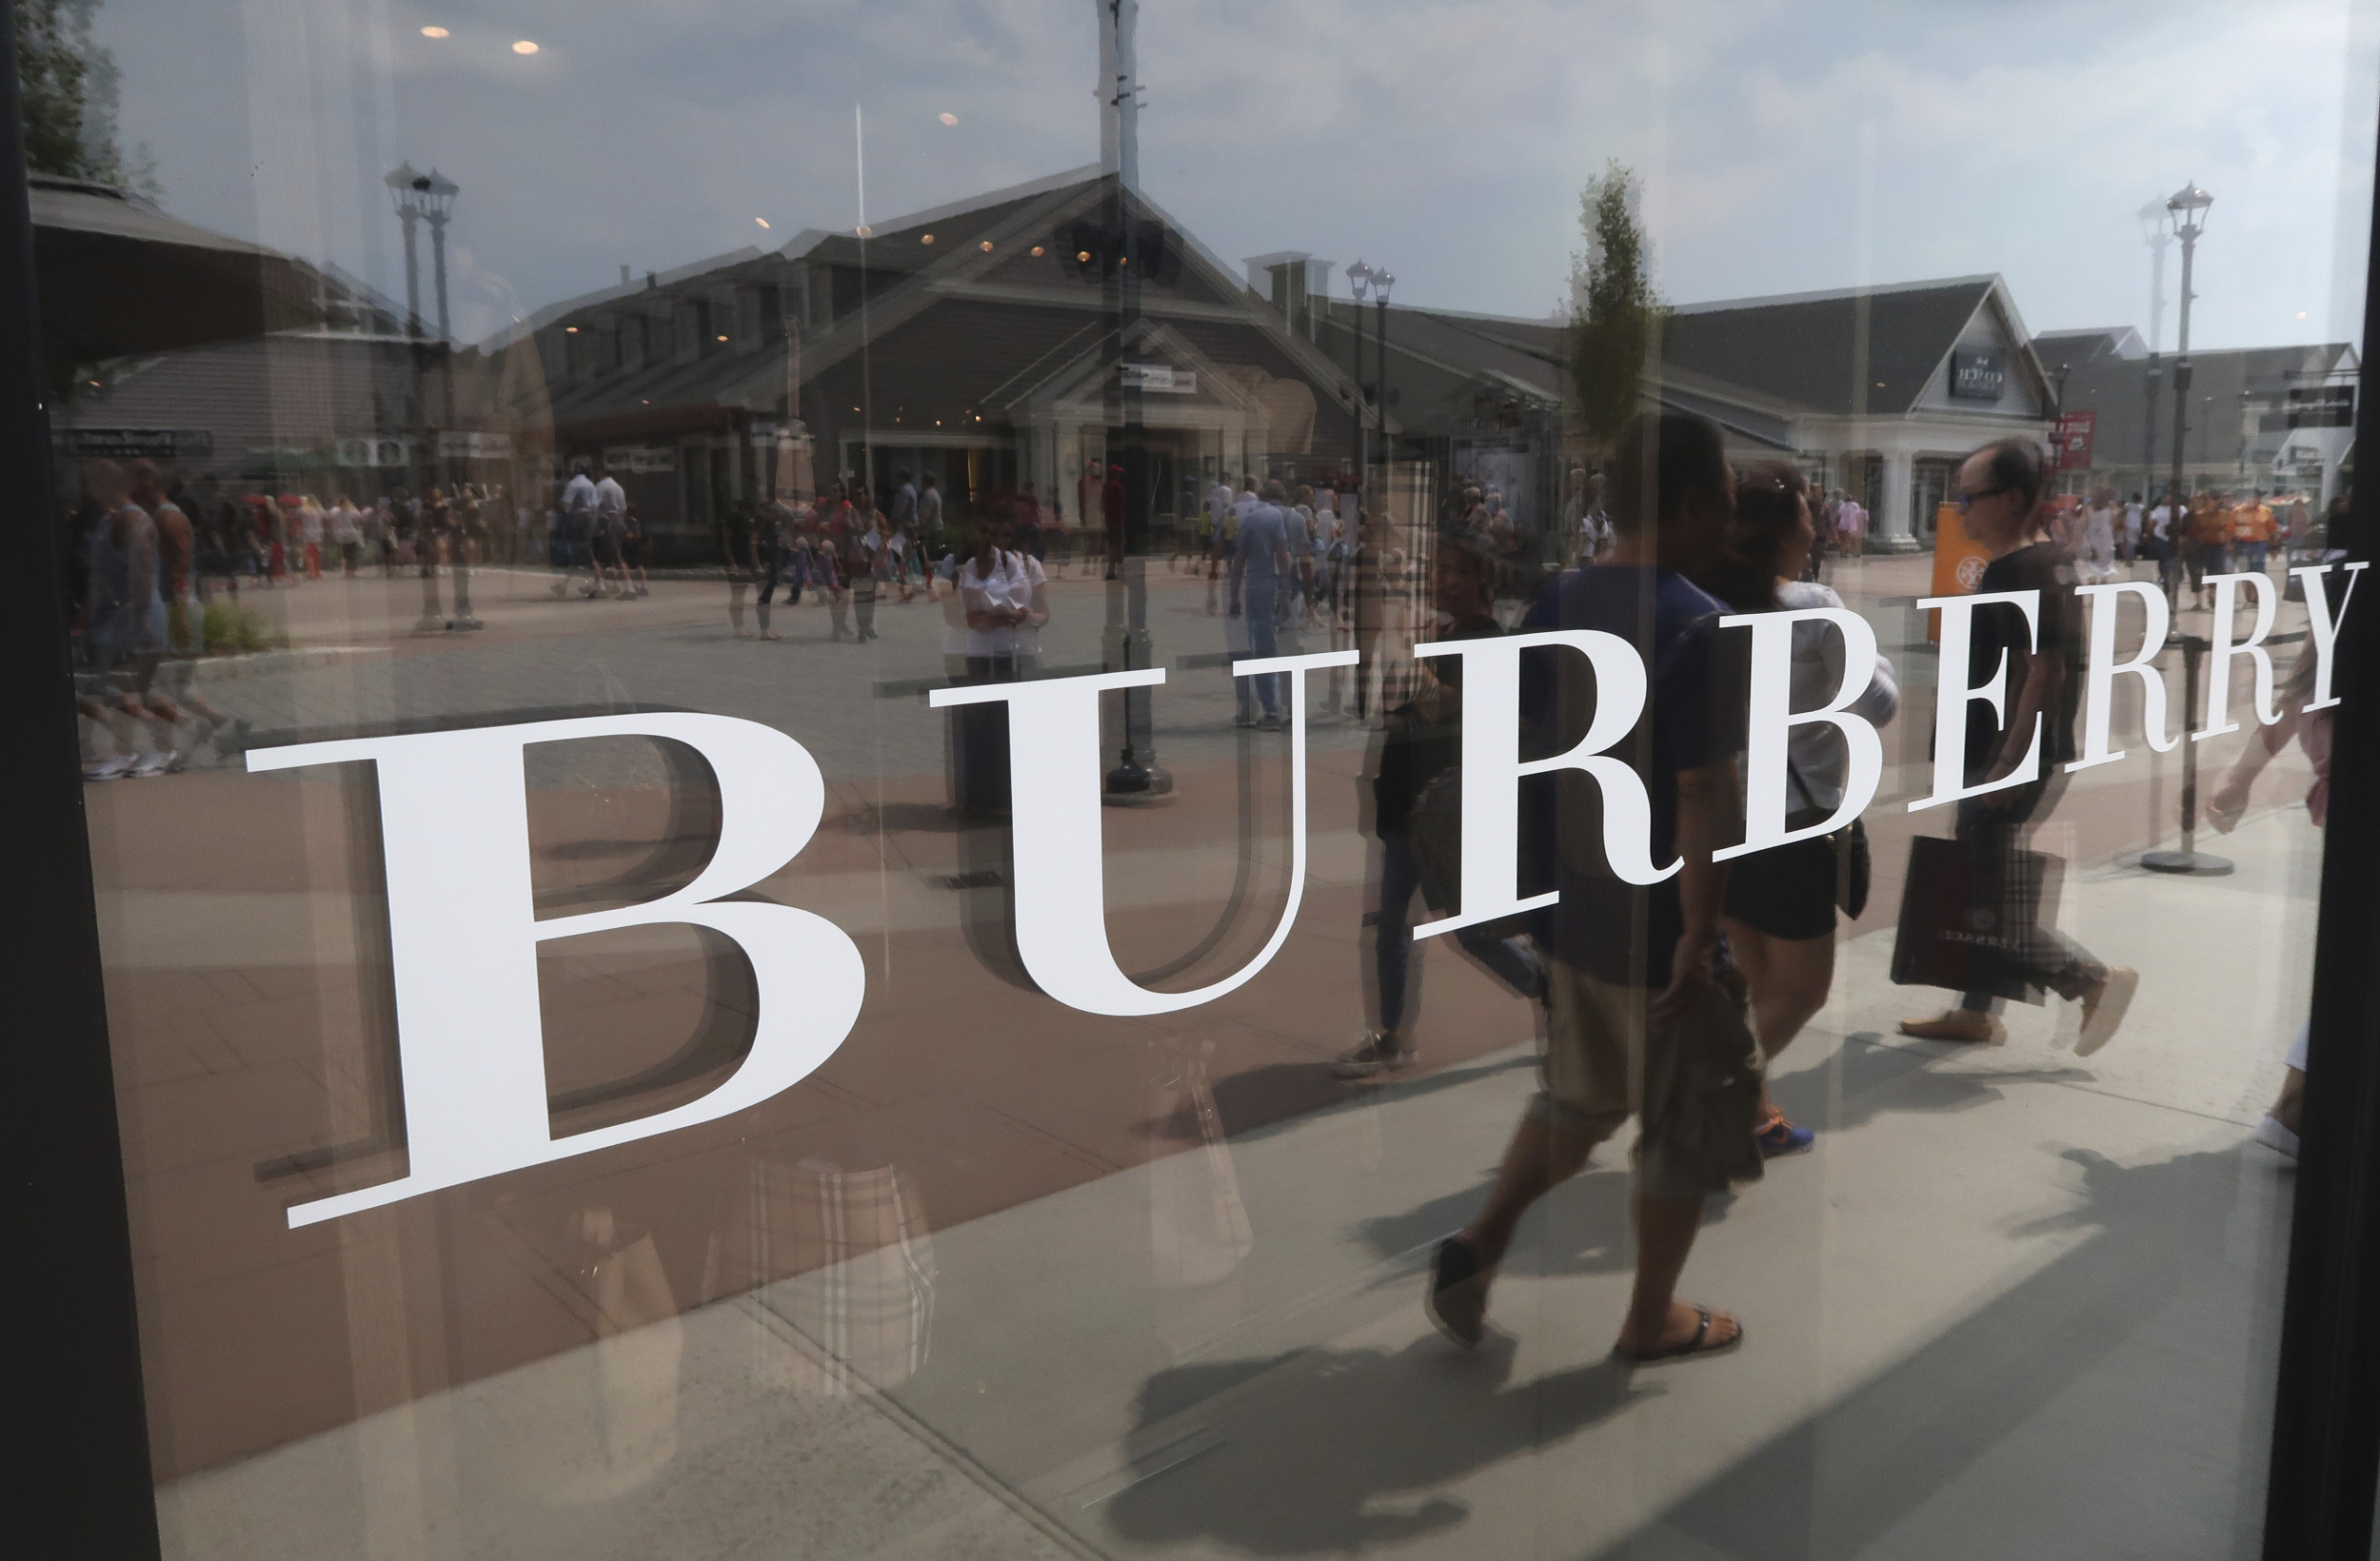 burberry sale 2019